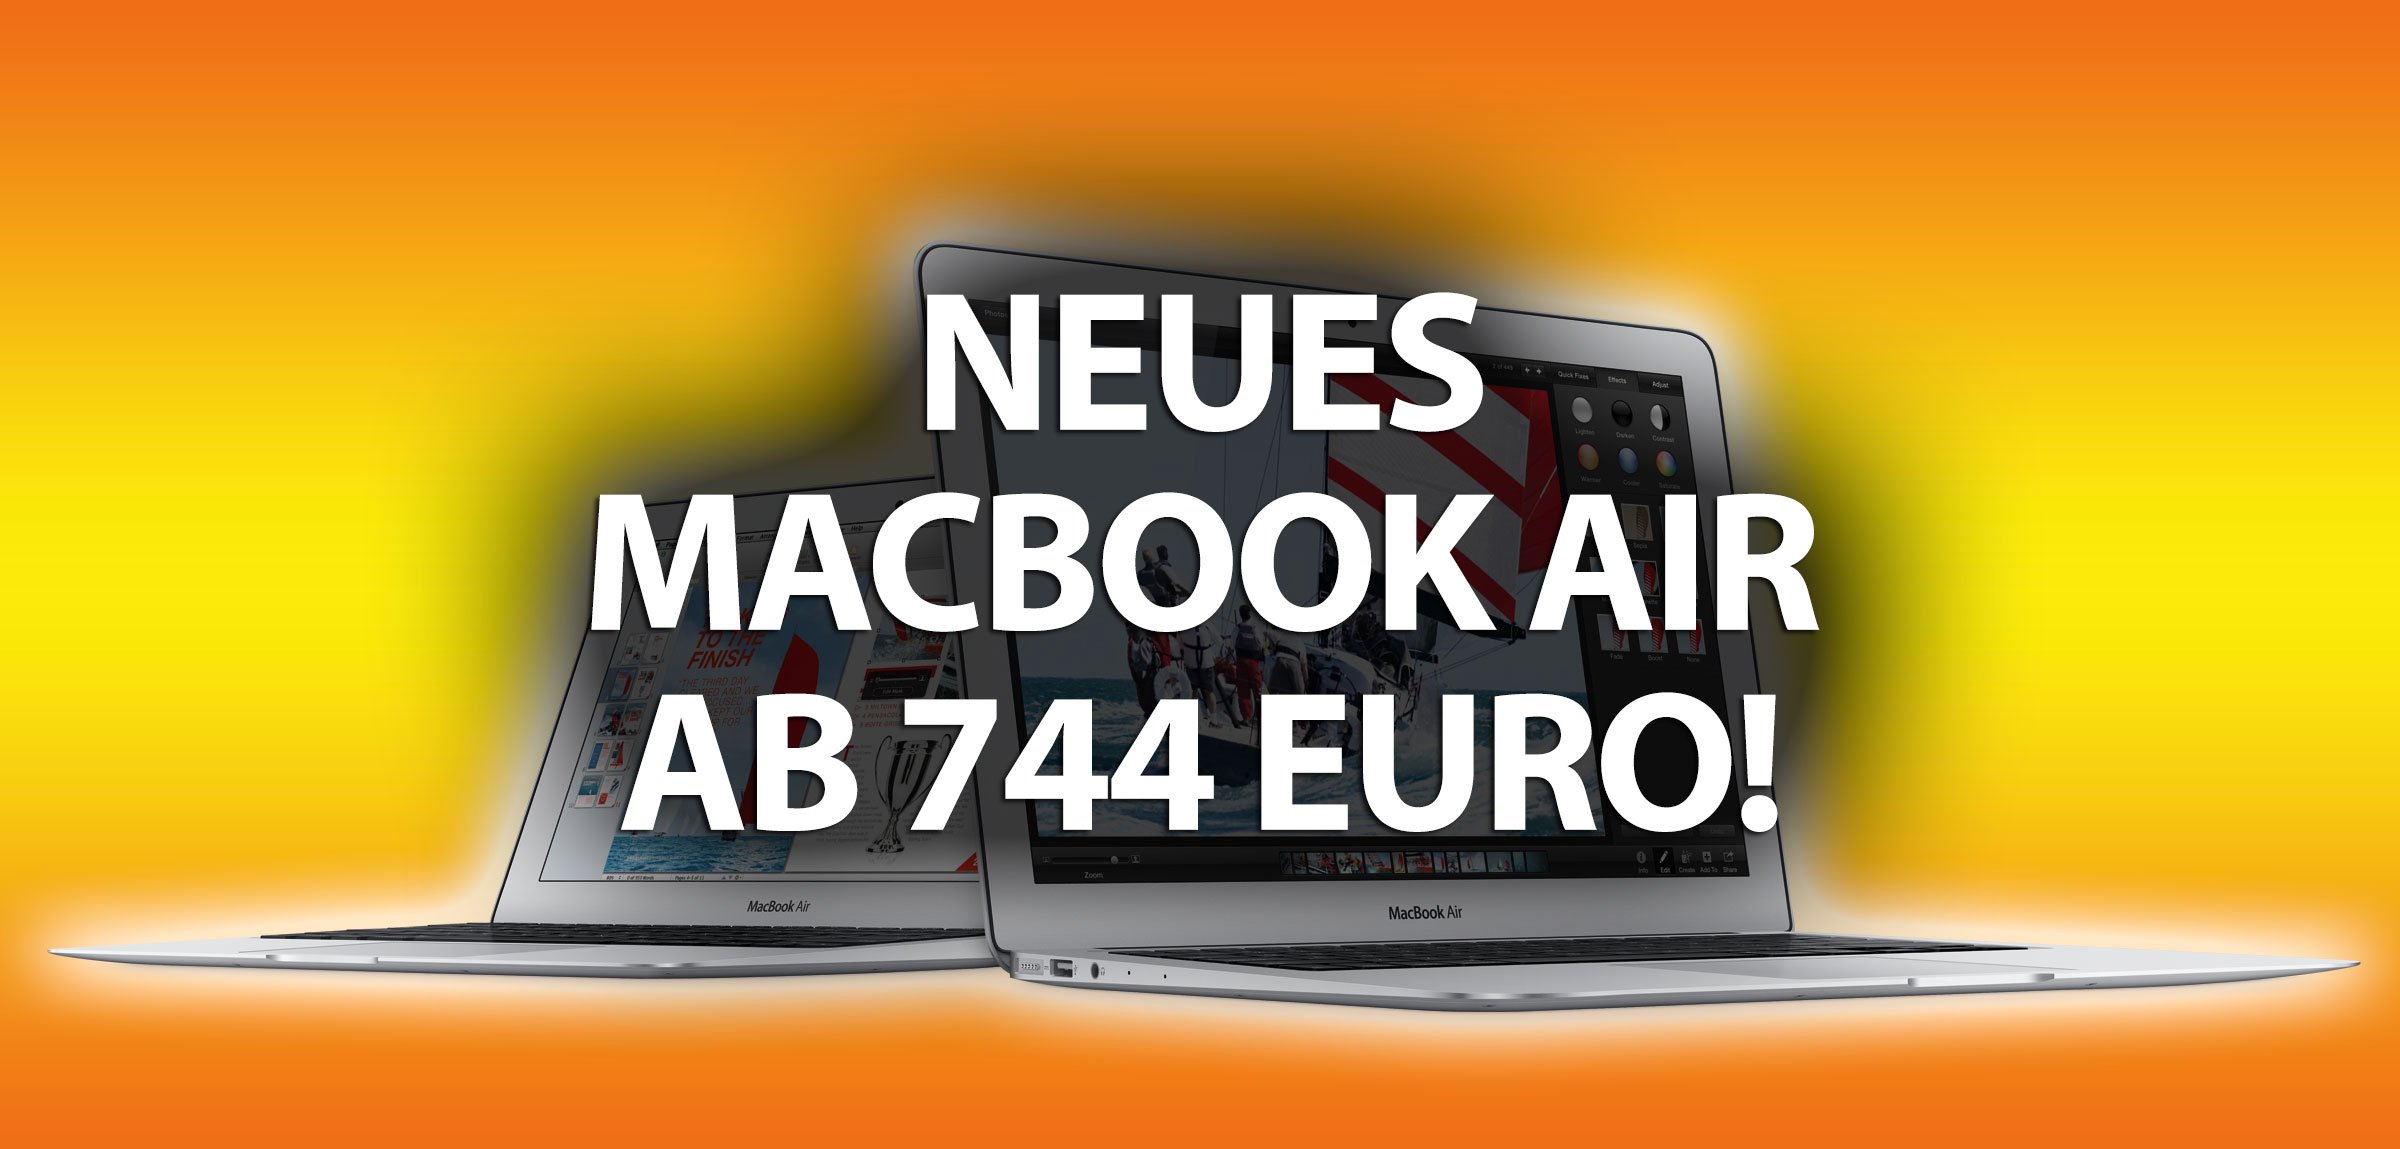 Neuer Rabattcode für Macbook Air 2014: Bester Preis! (Update: Studenten-Rabatt) 5